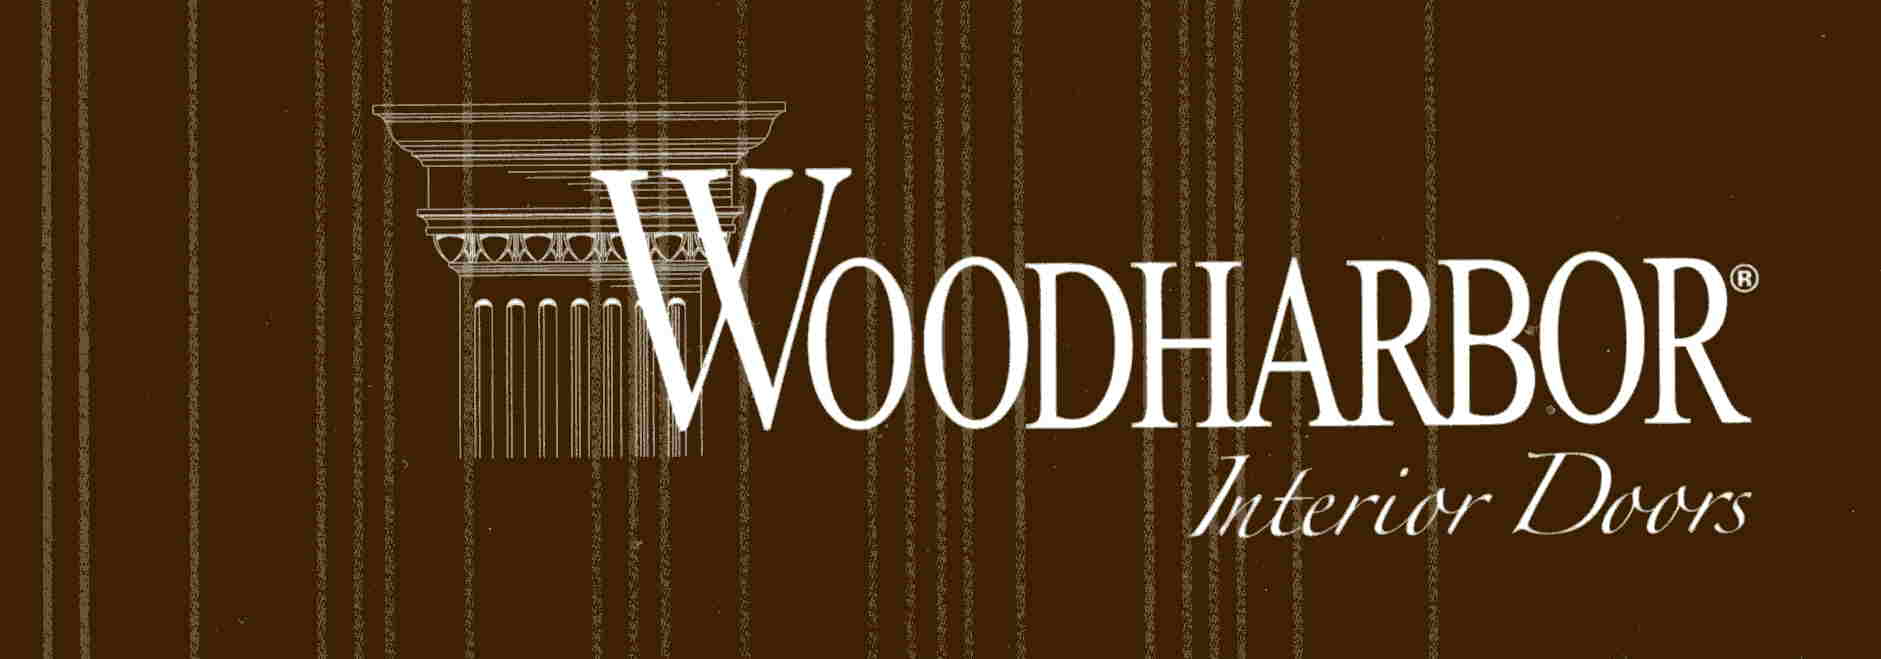 woodharbor-logo.jpg